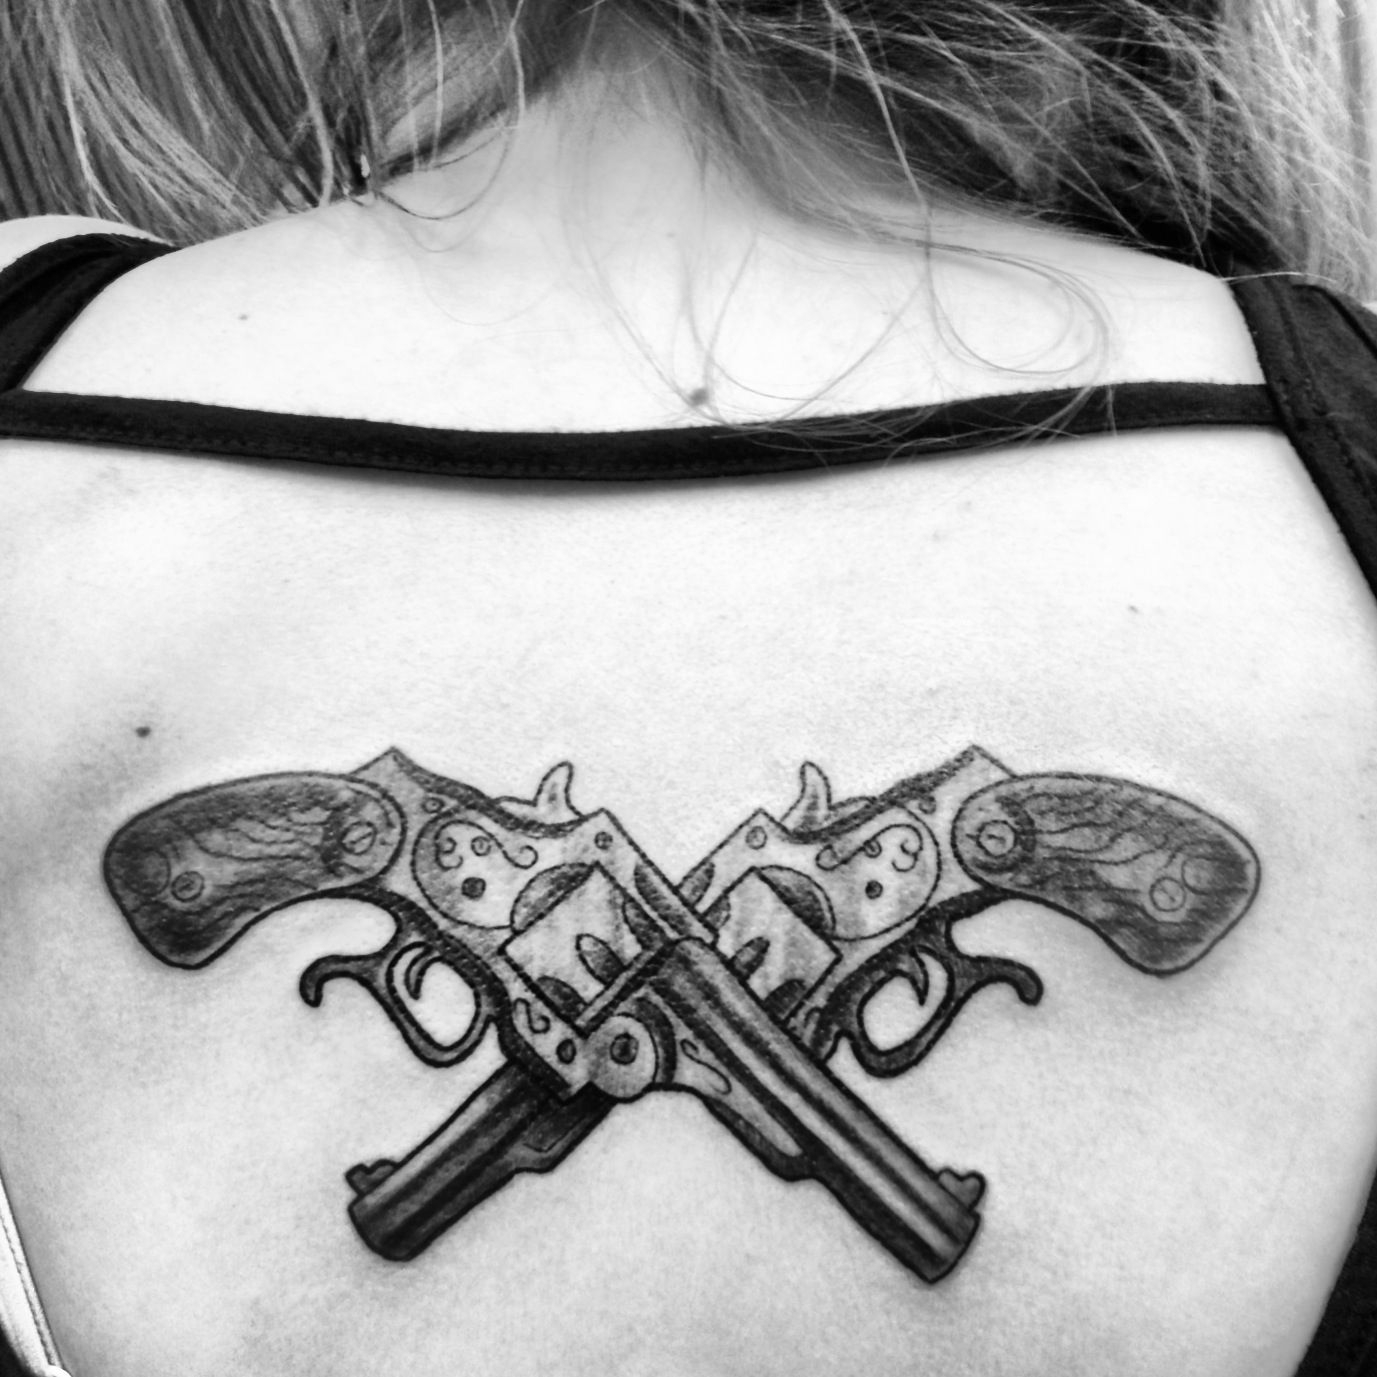 My First Tattoo Crossed Pistols Love Love Love It Tatted regarding sizing 1377 X 1377